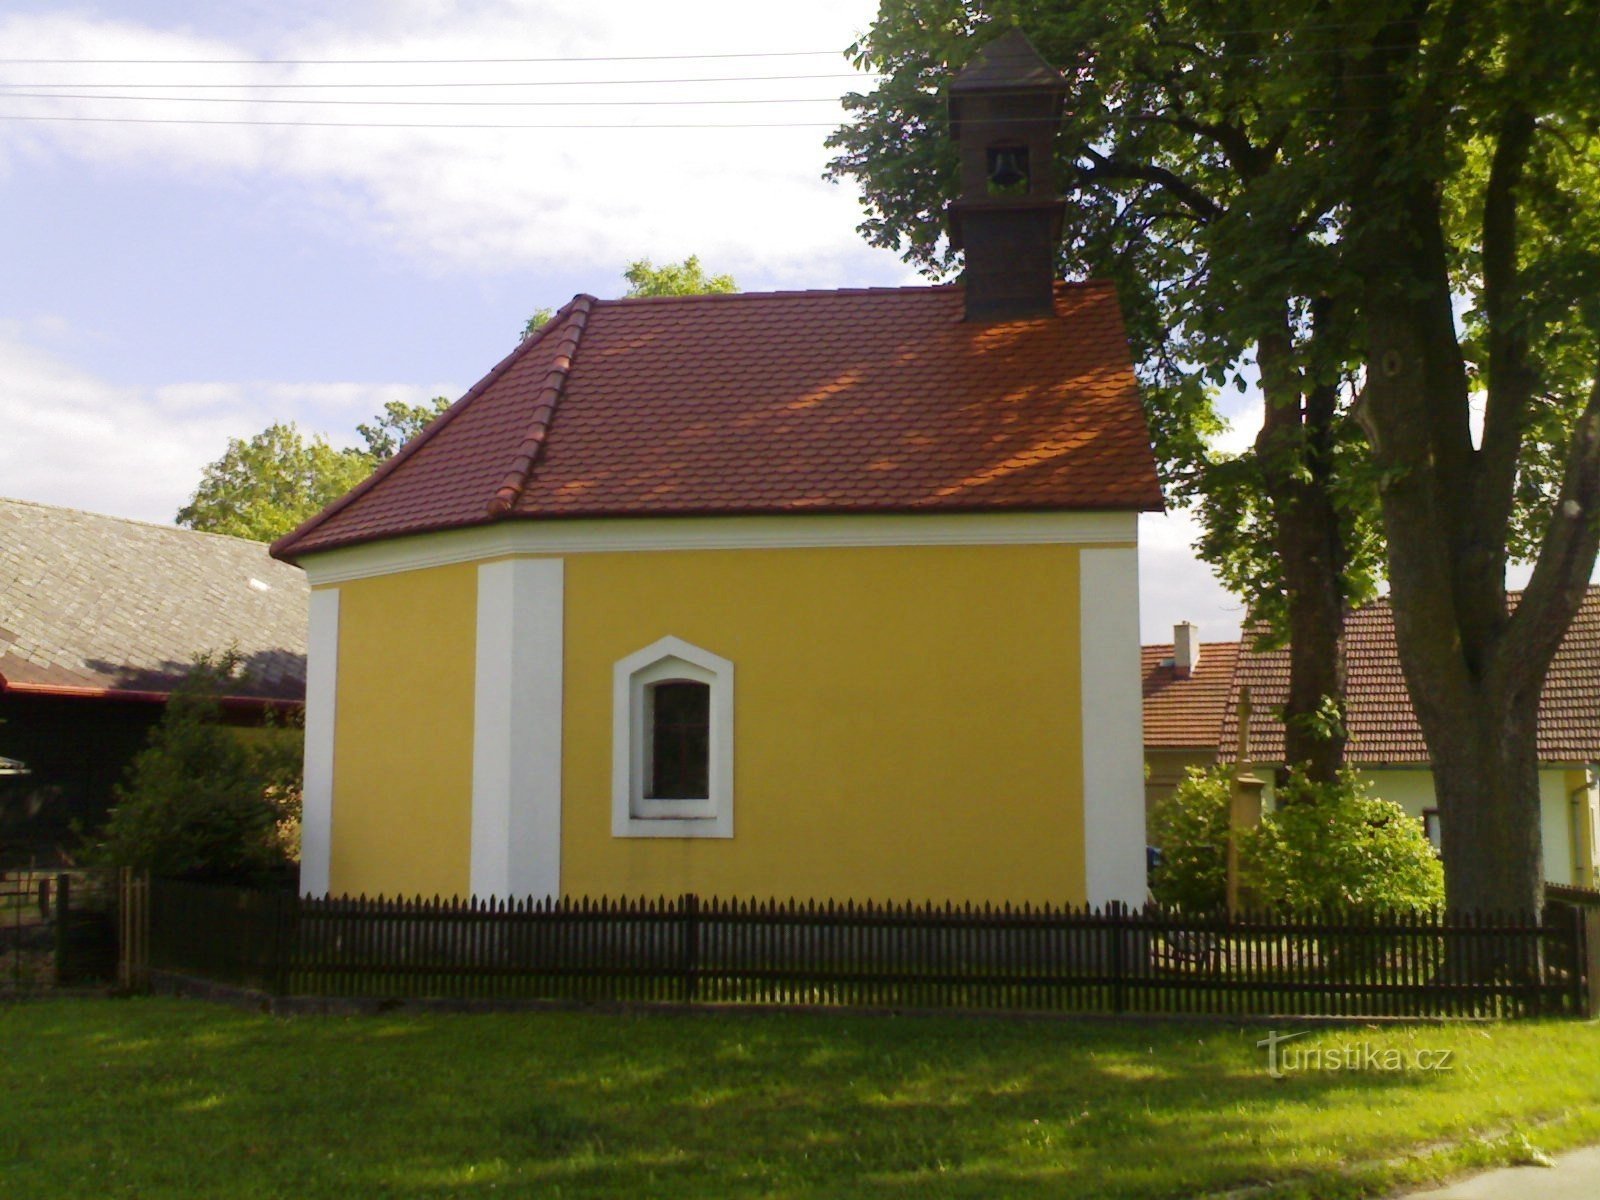 Ježkovice - Vår Fru av Lourdes kapell